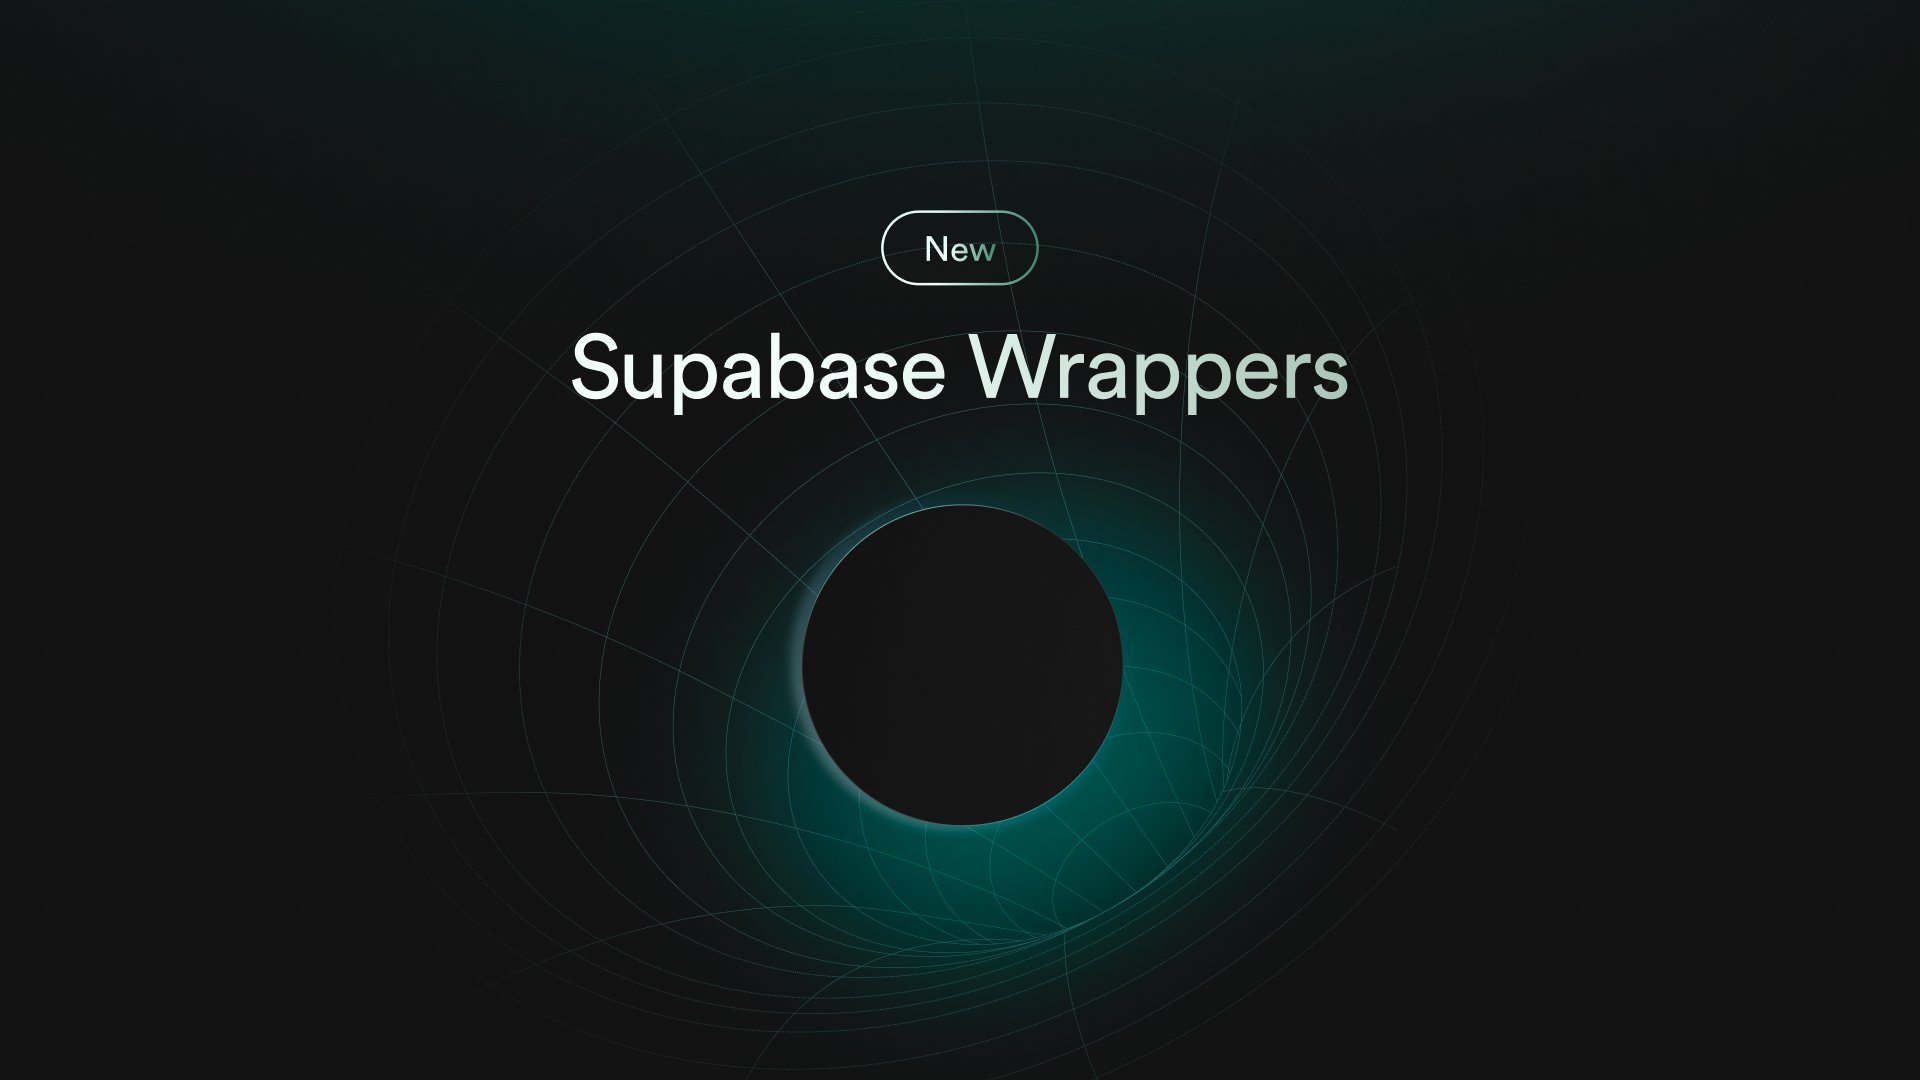 Supabase Wrappers, a Postgres FDW framework written in Rust